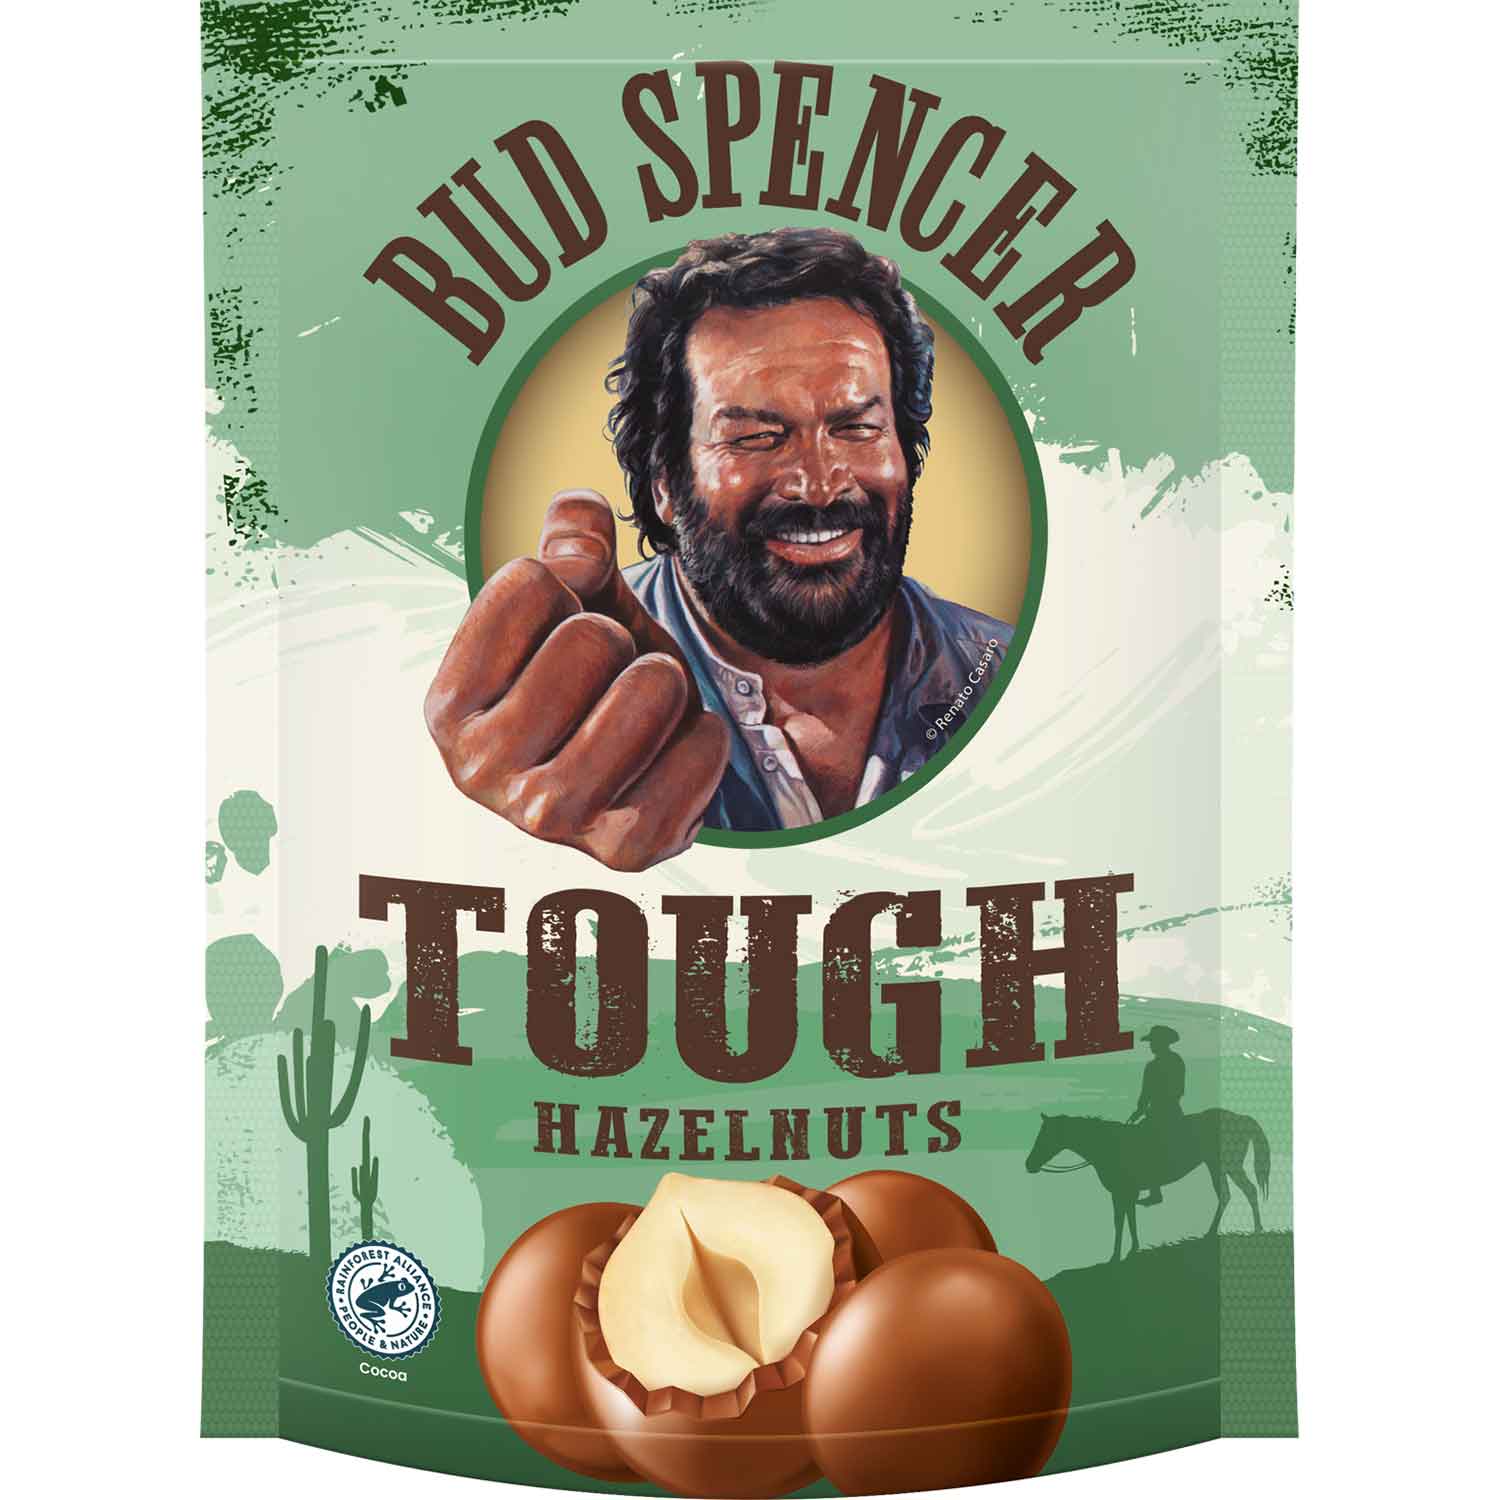 Bud Spencer - Tough Hazelnuts